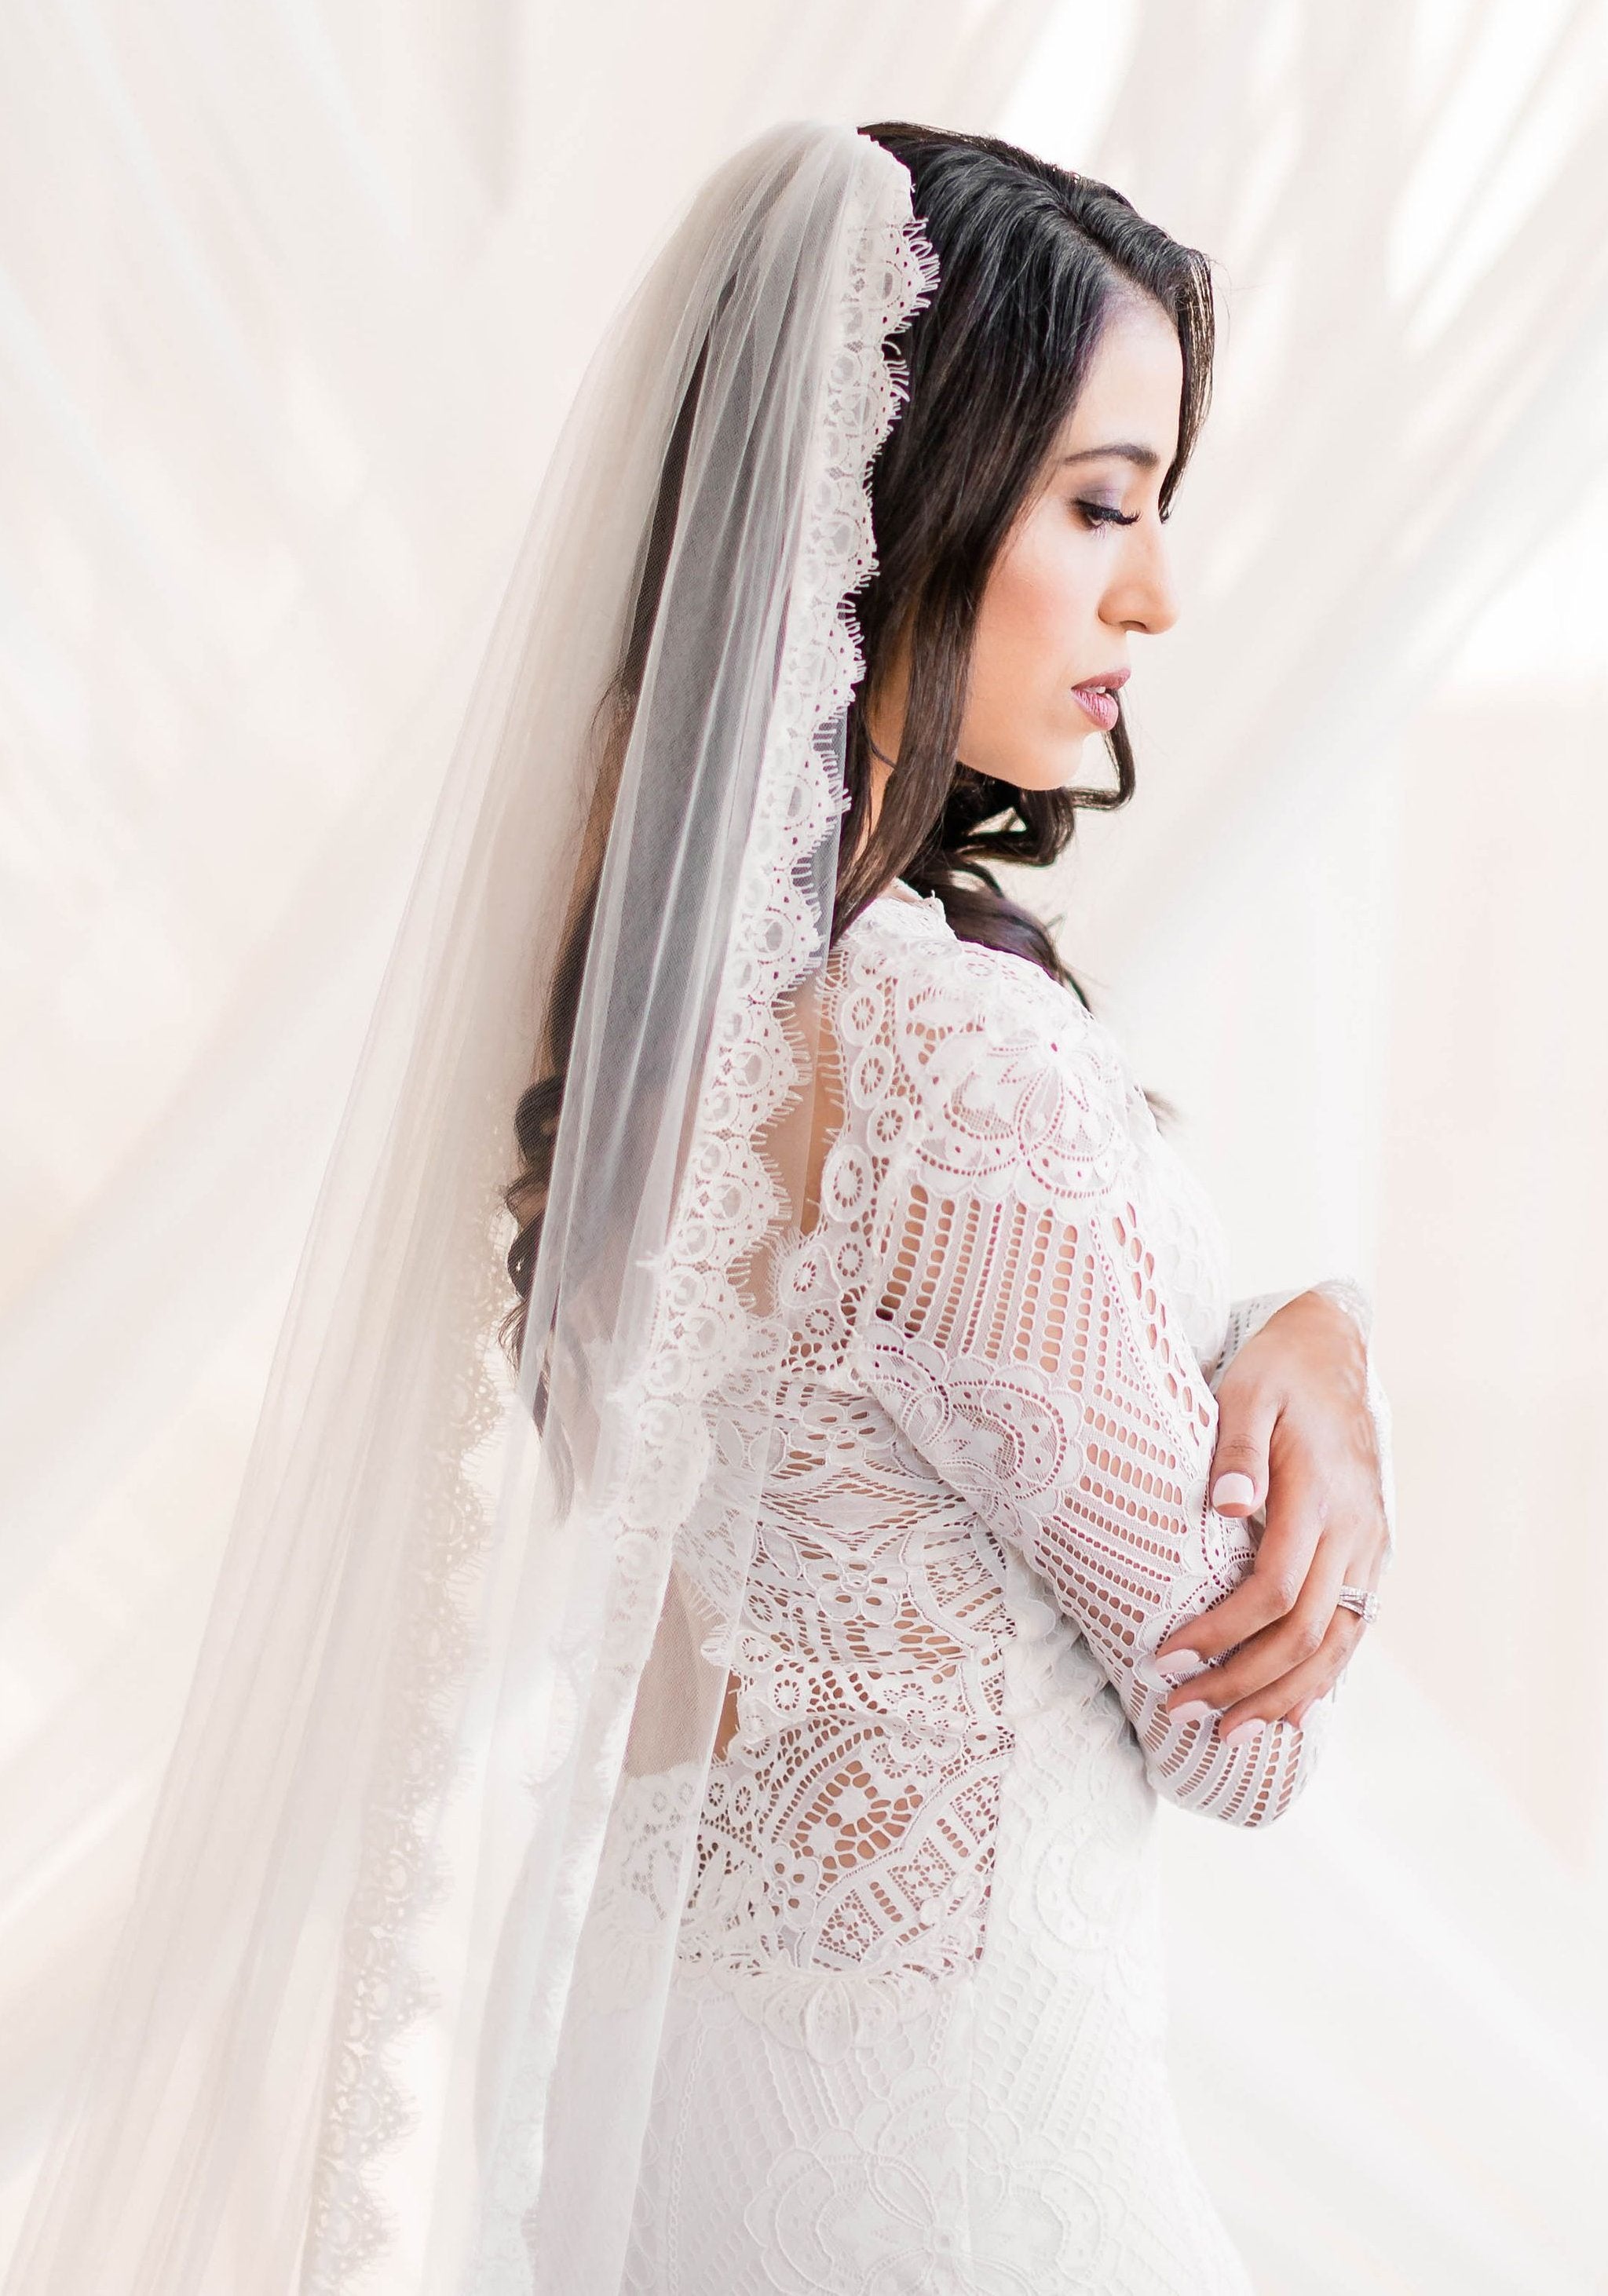 Handmade bridal veils